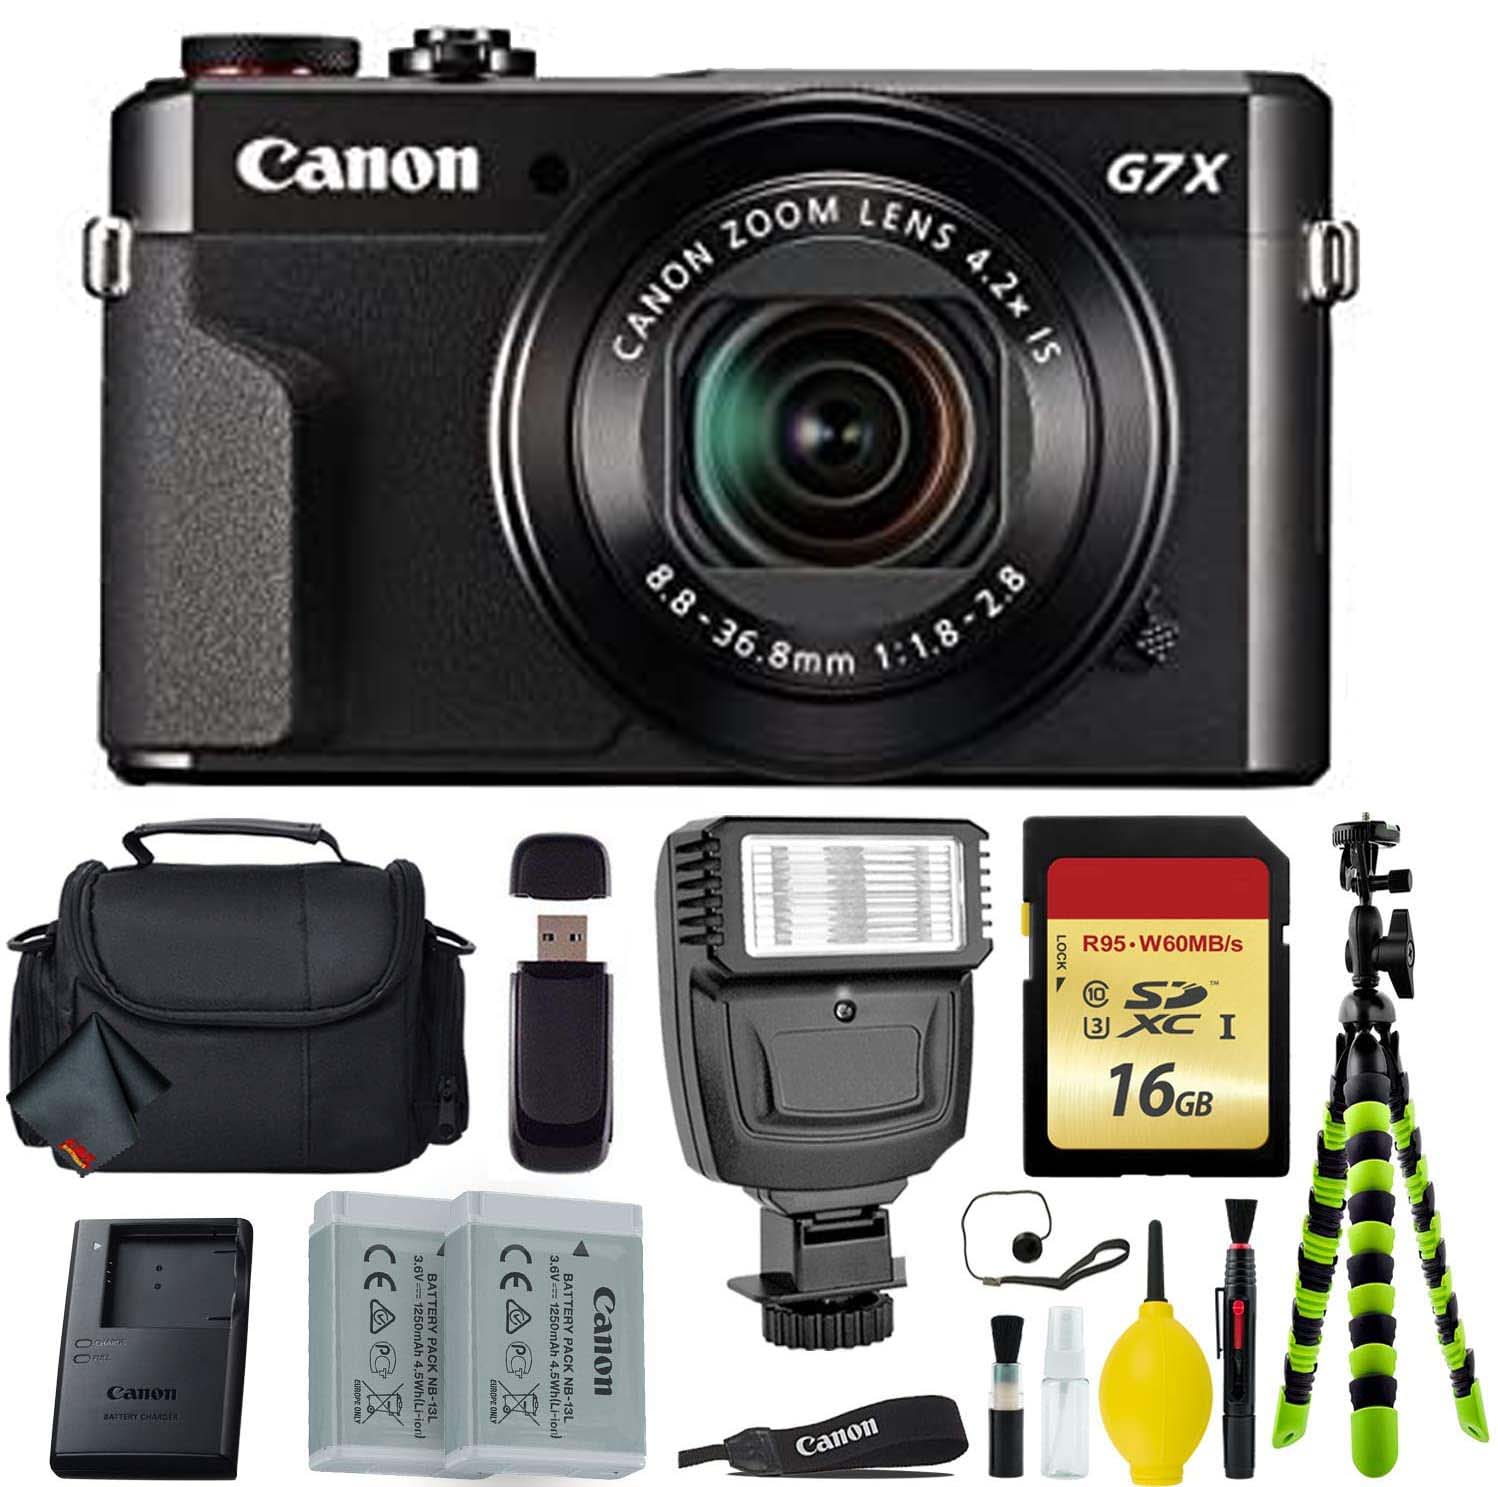 Canon PowerShot G7 X Mark II Point and Shoot Digital Camera + Extra Battery + Digital Flash + Camera Case + 16GB Class 1 Card Base Bundle